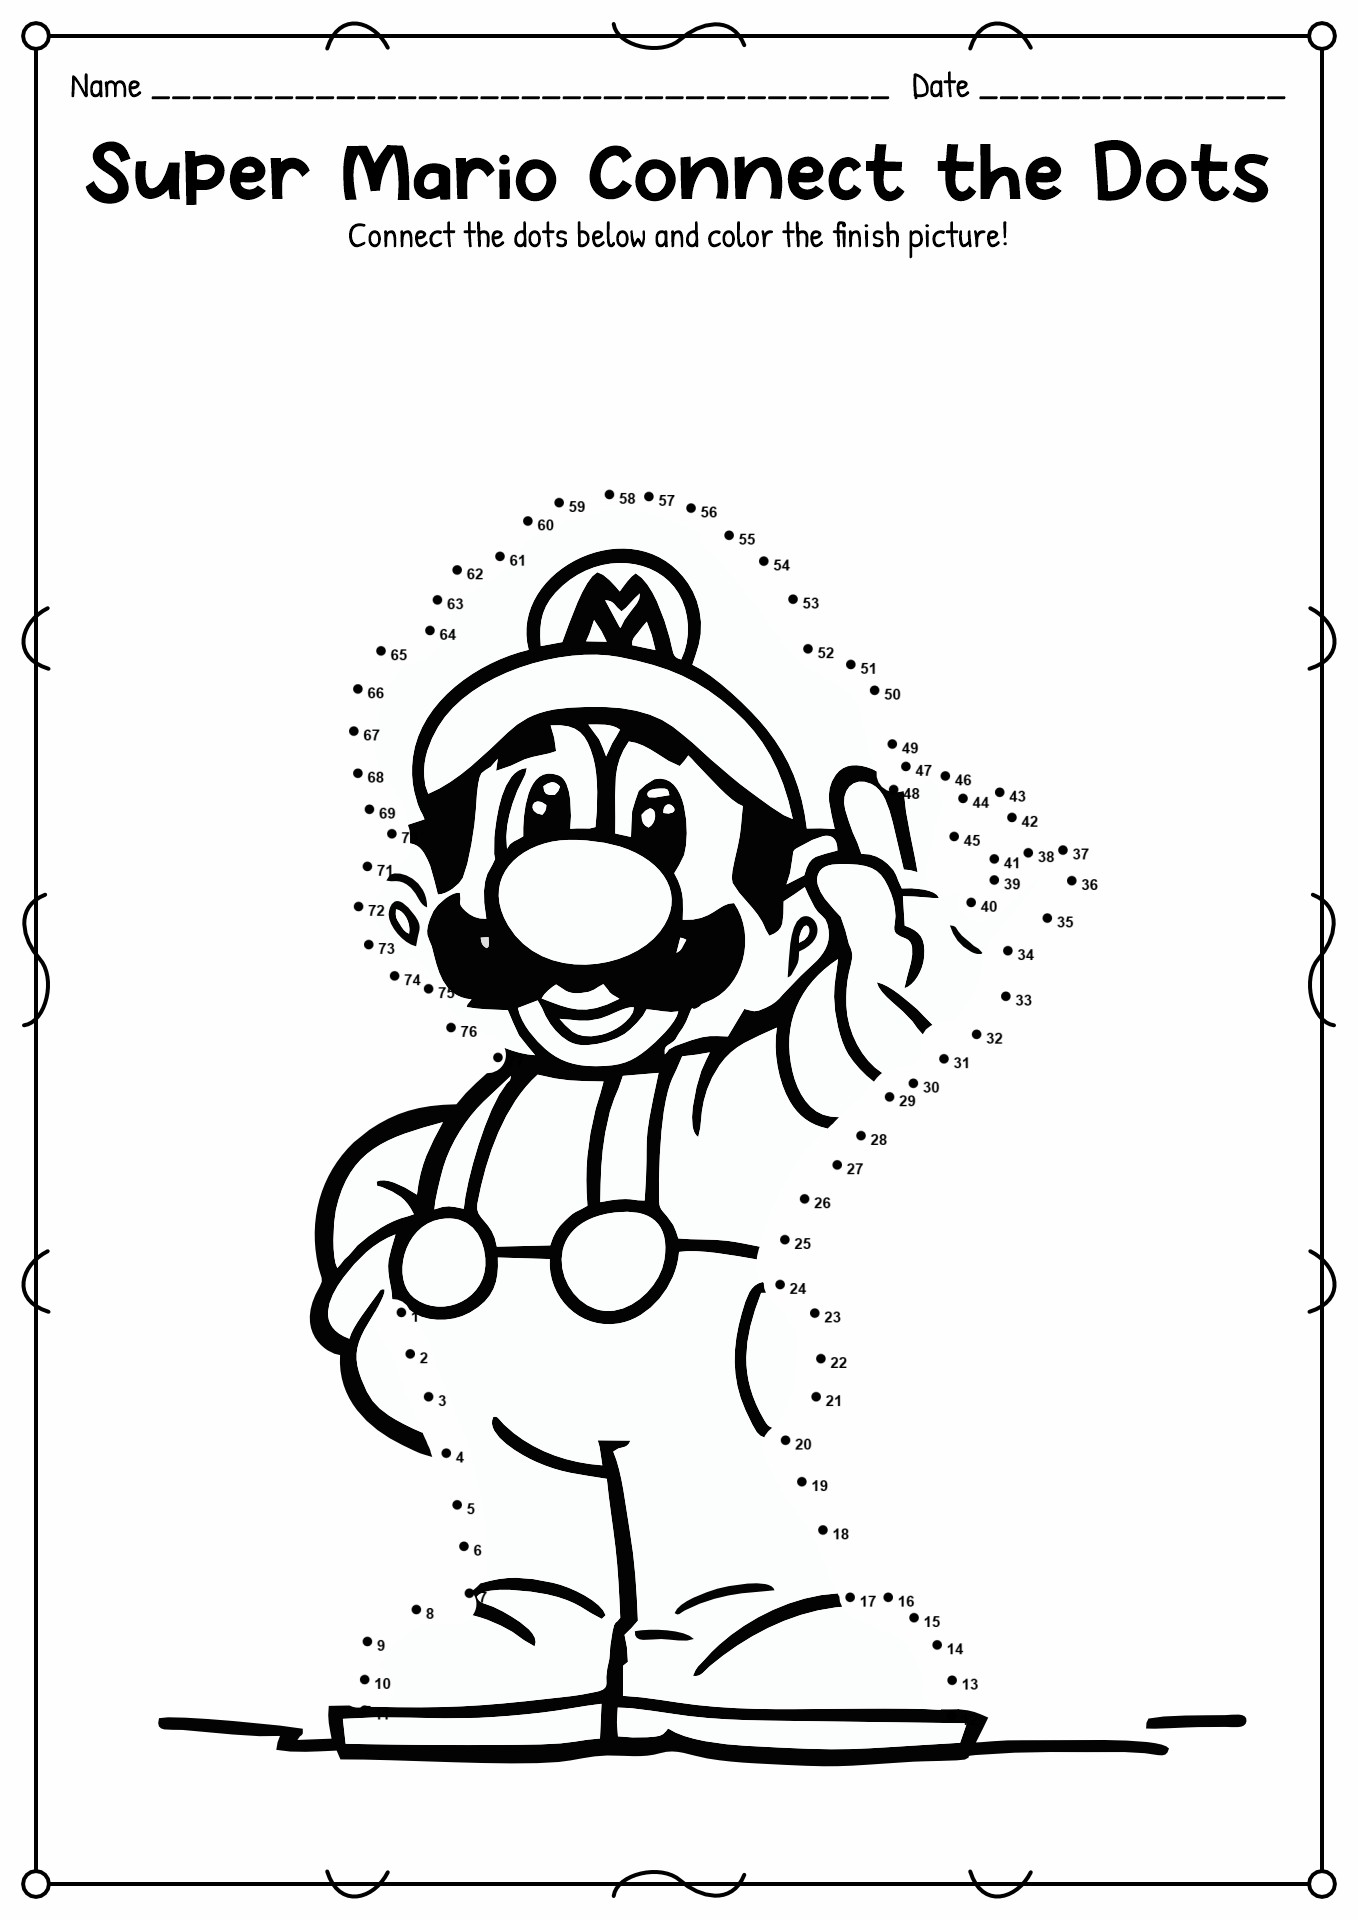 Connect Dots Super Mario Image